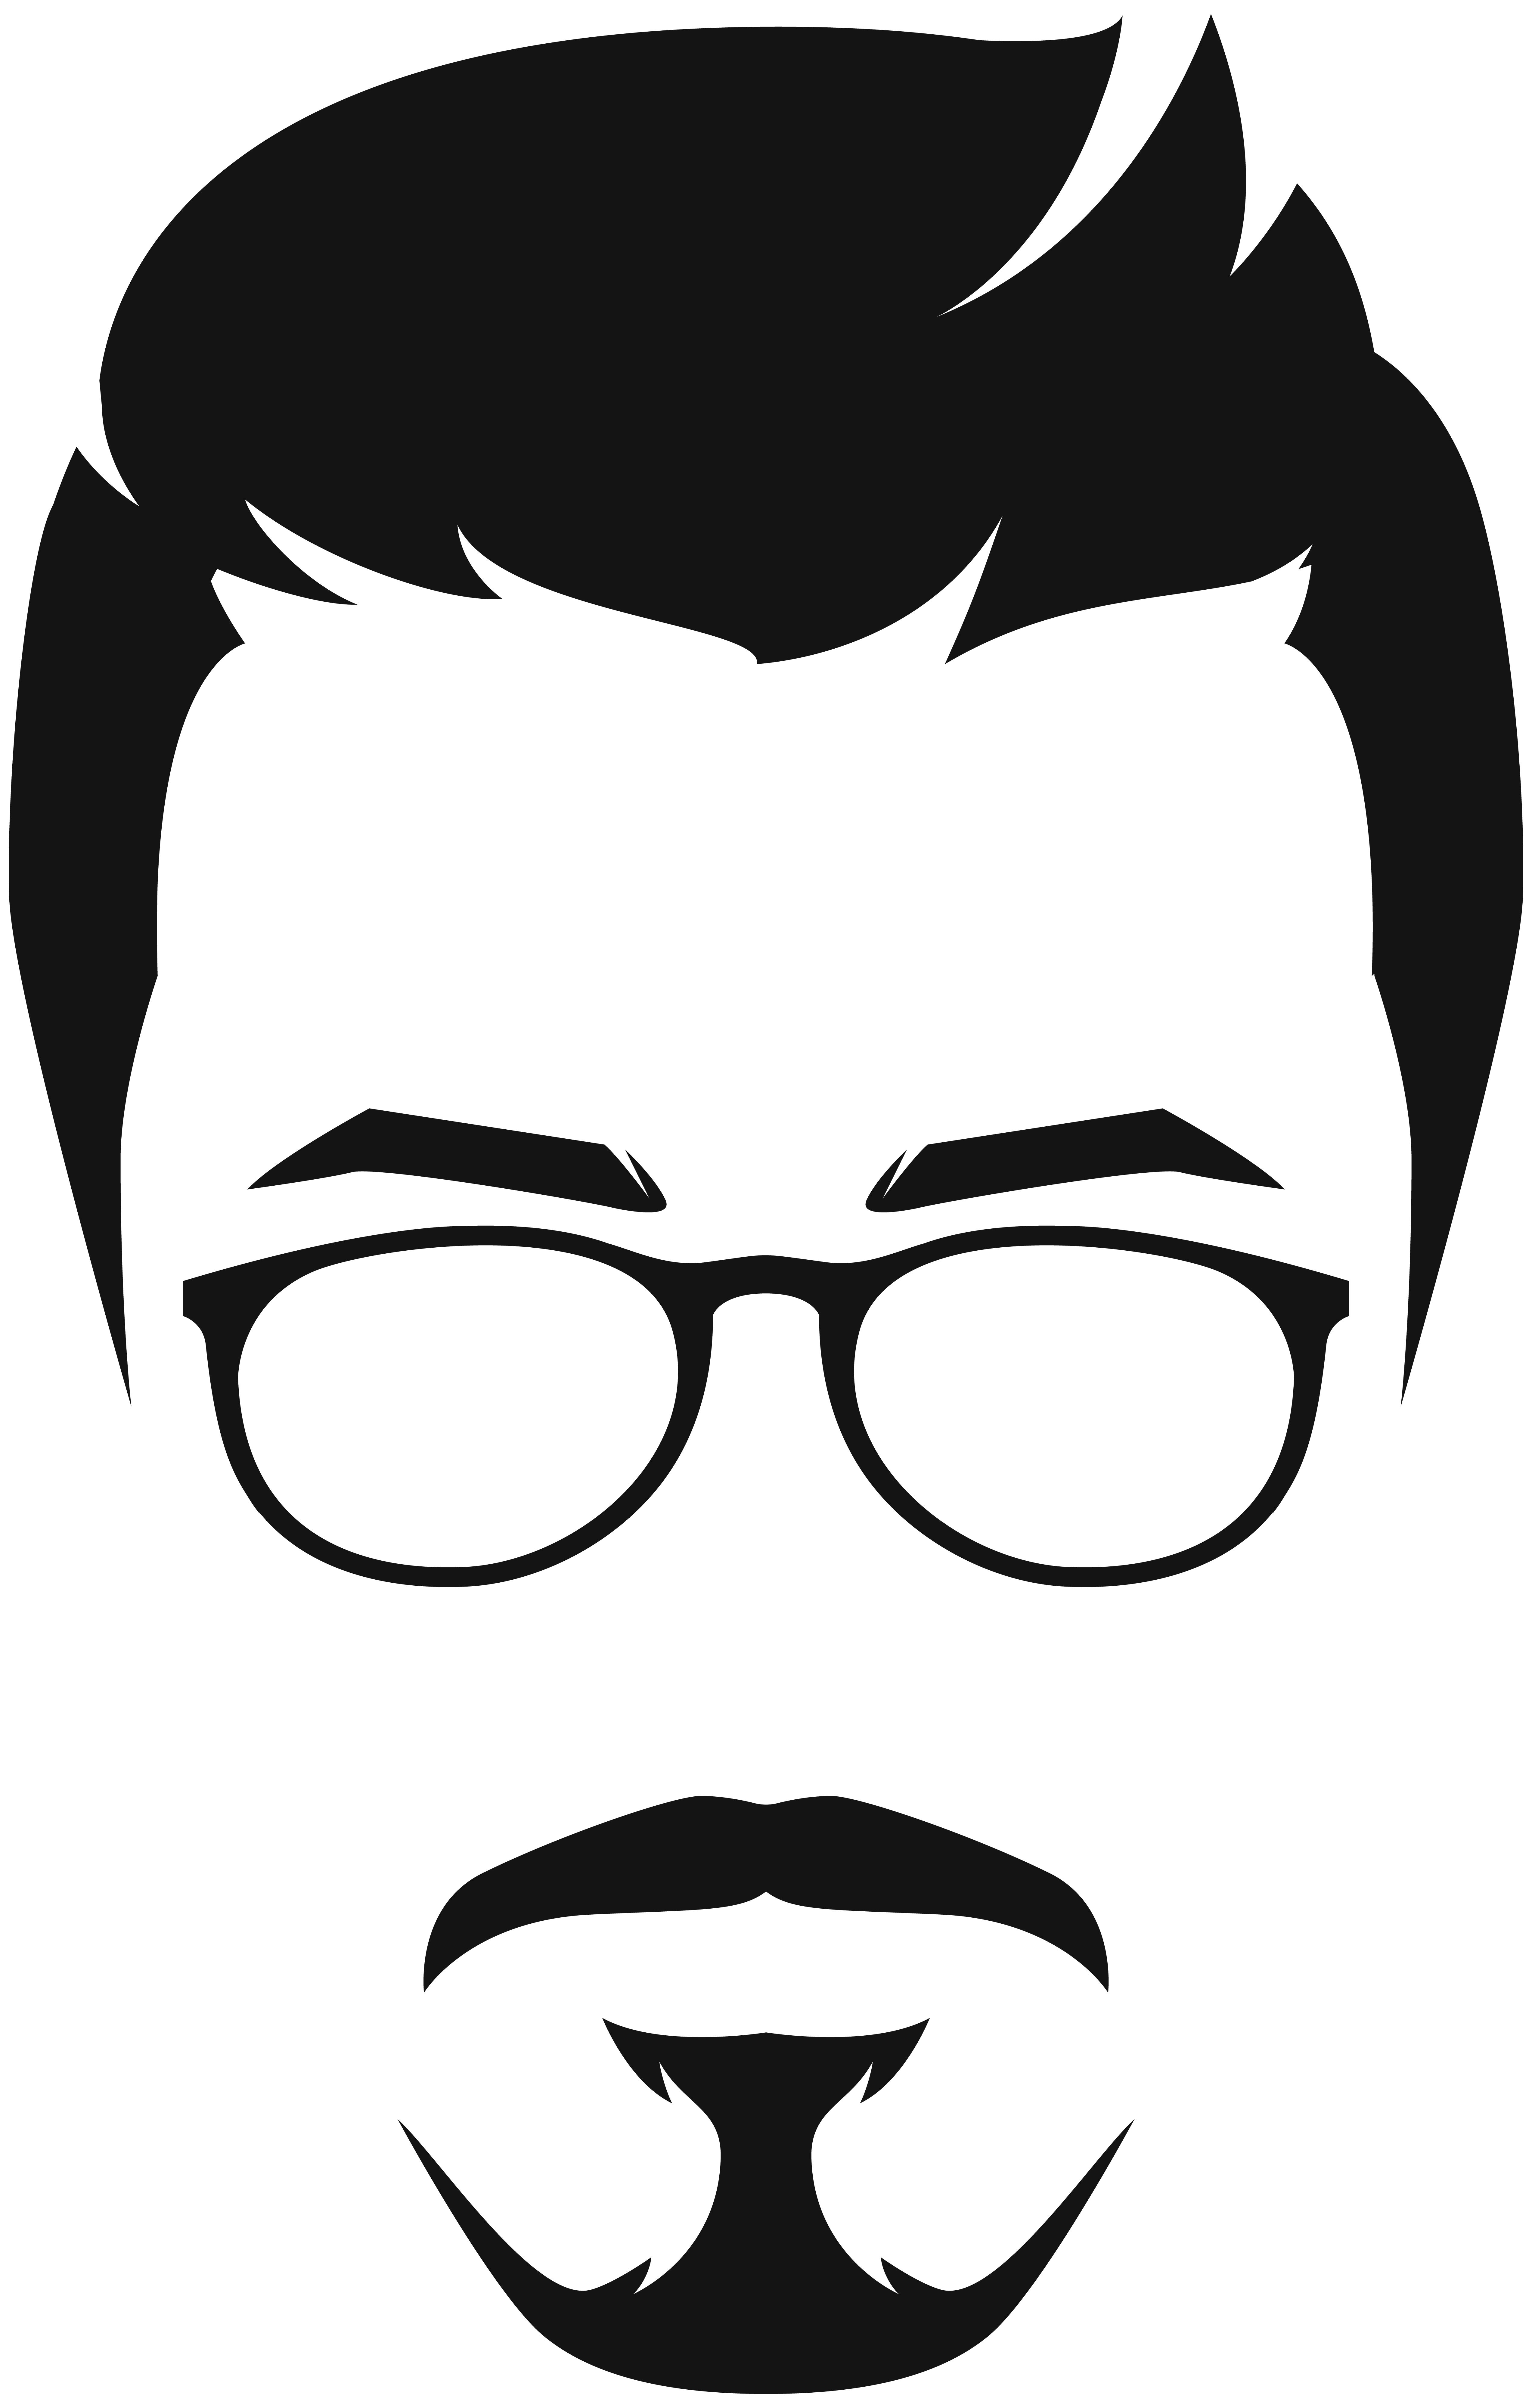 Hipster Face Transparent Clip Art Image.